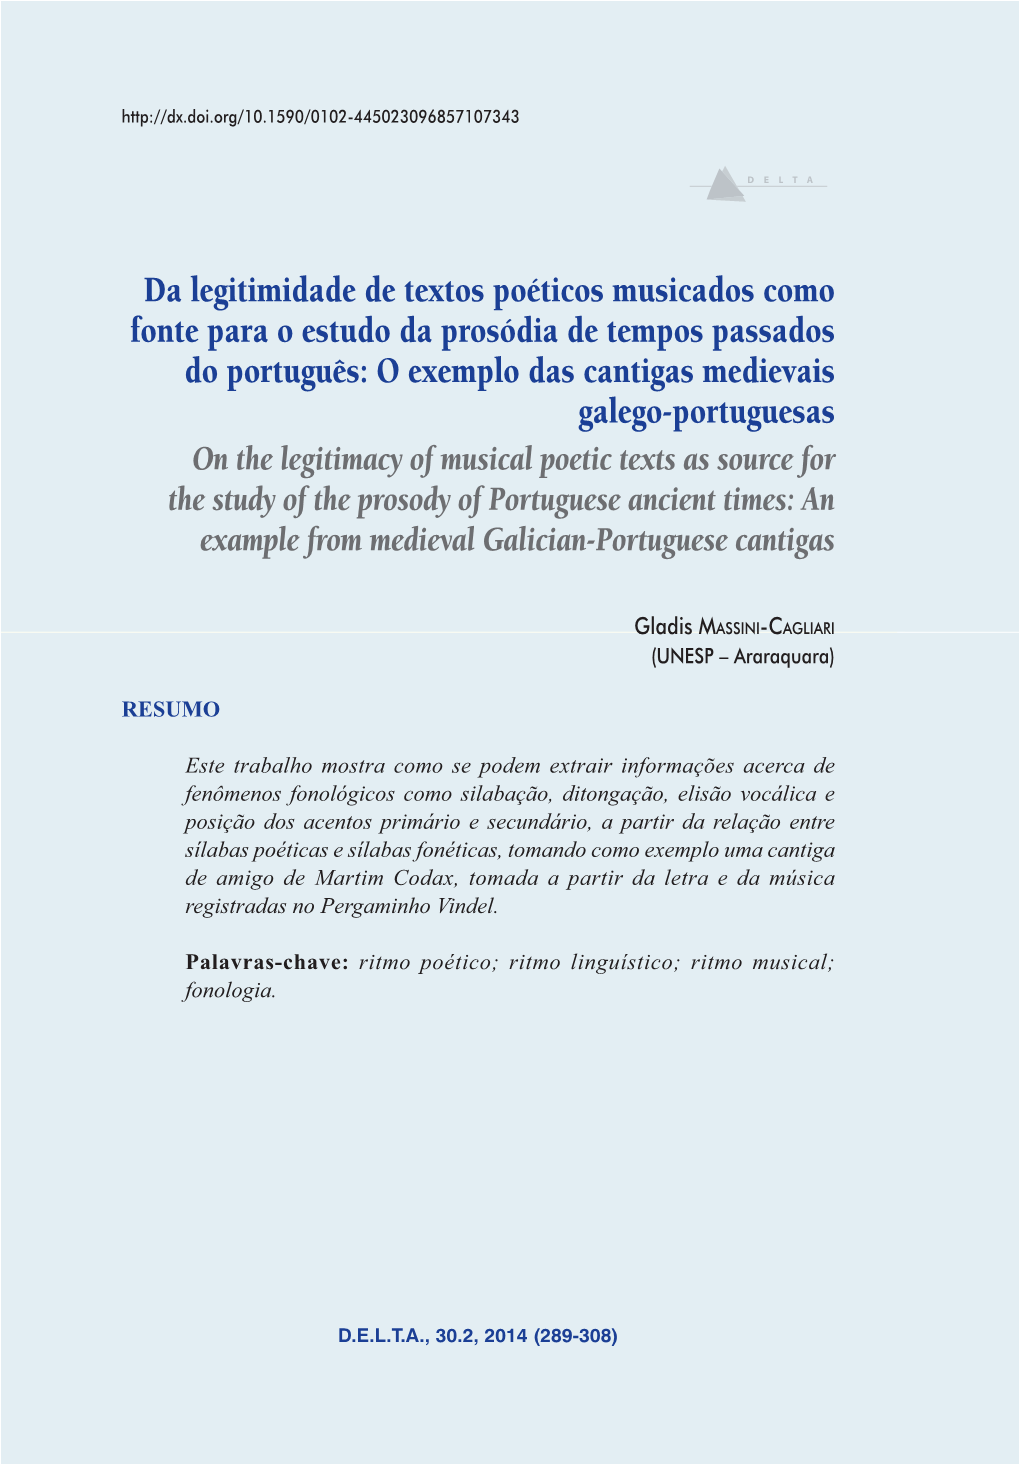 Download PDF (Português)